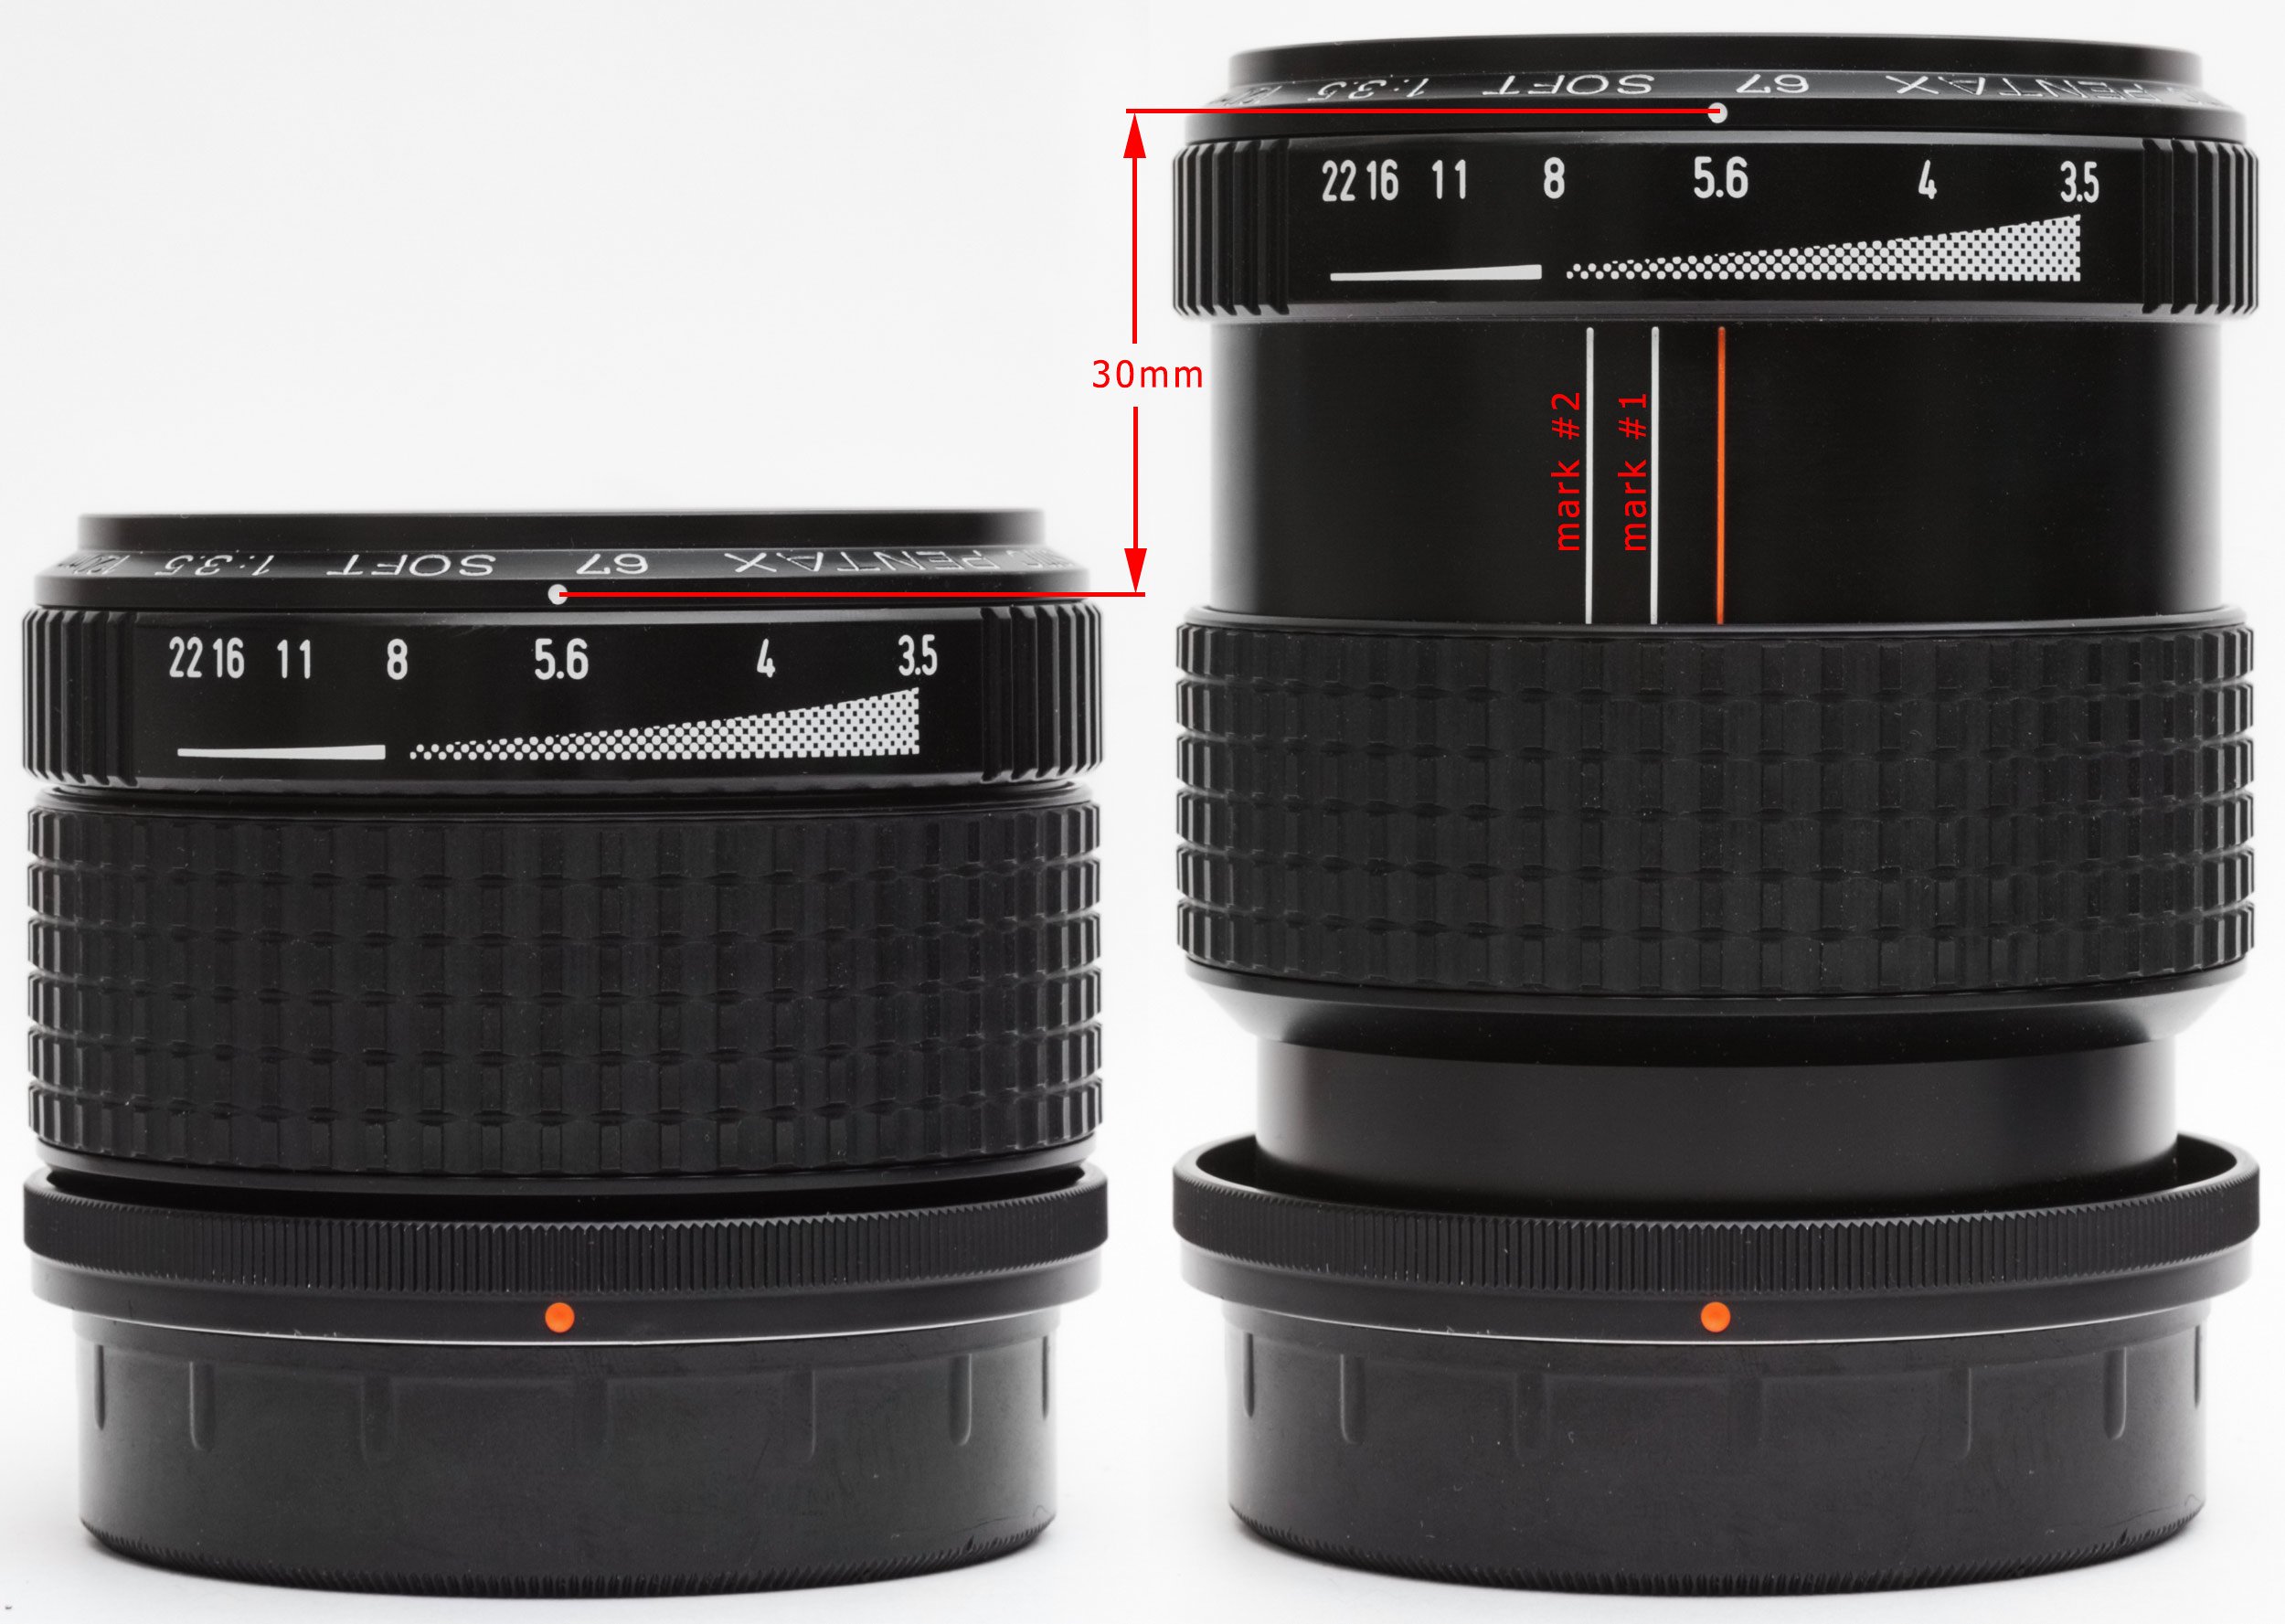 Pentax 67 120mm F3.5: Lens review, Experience, Bokeh, Samples